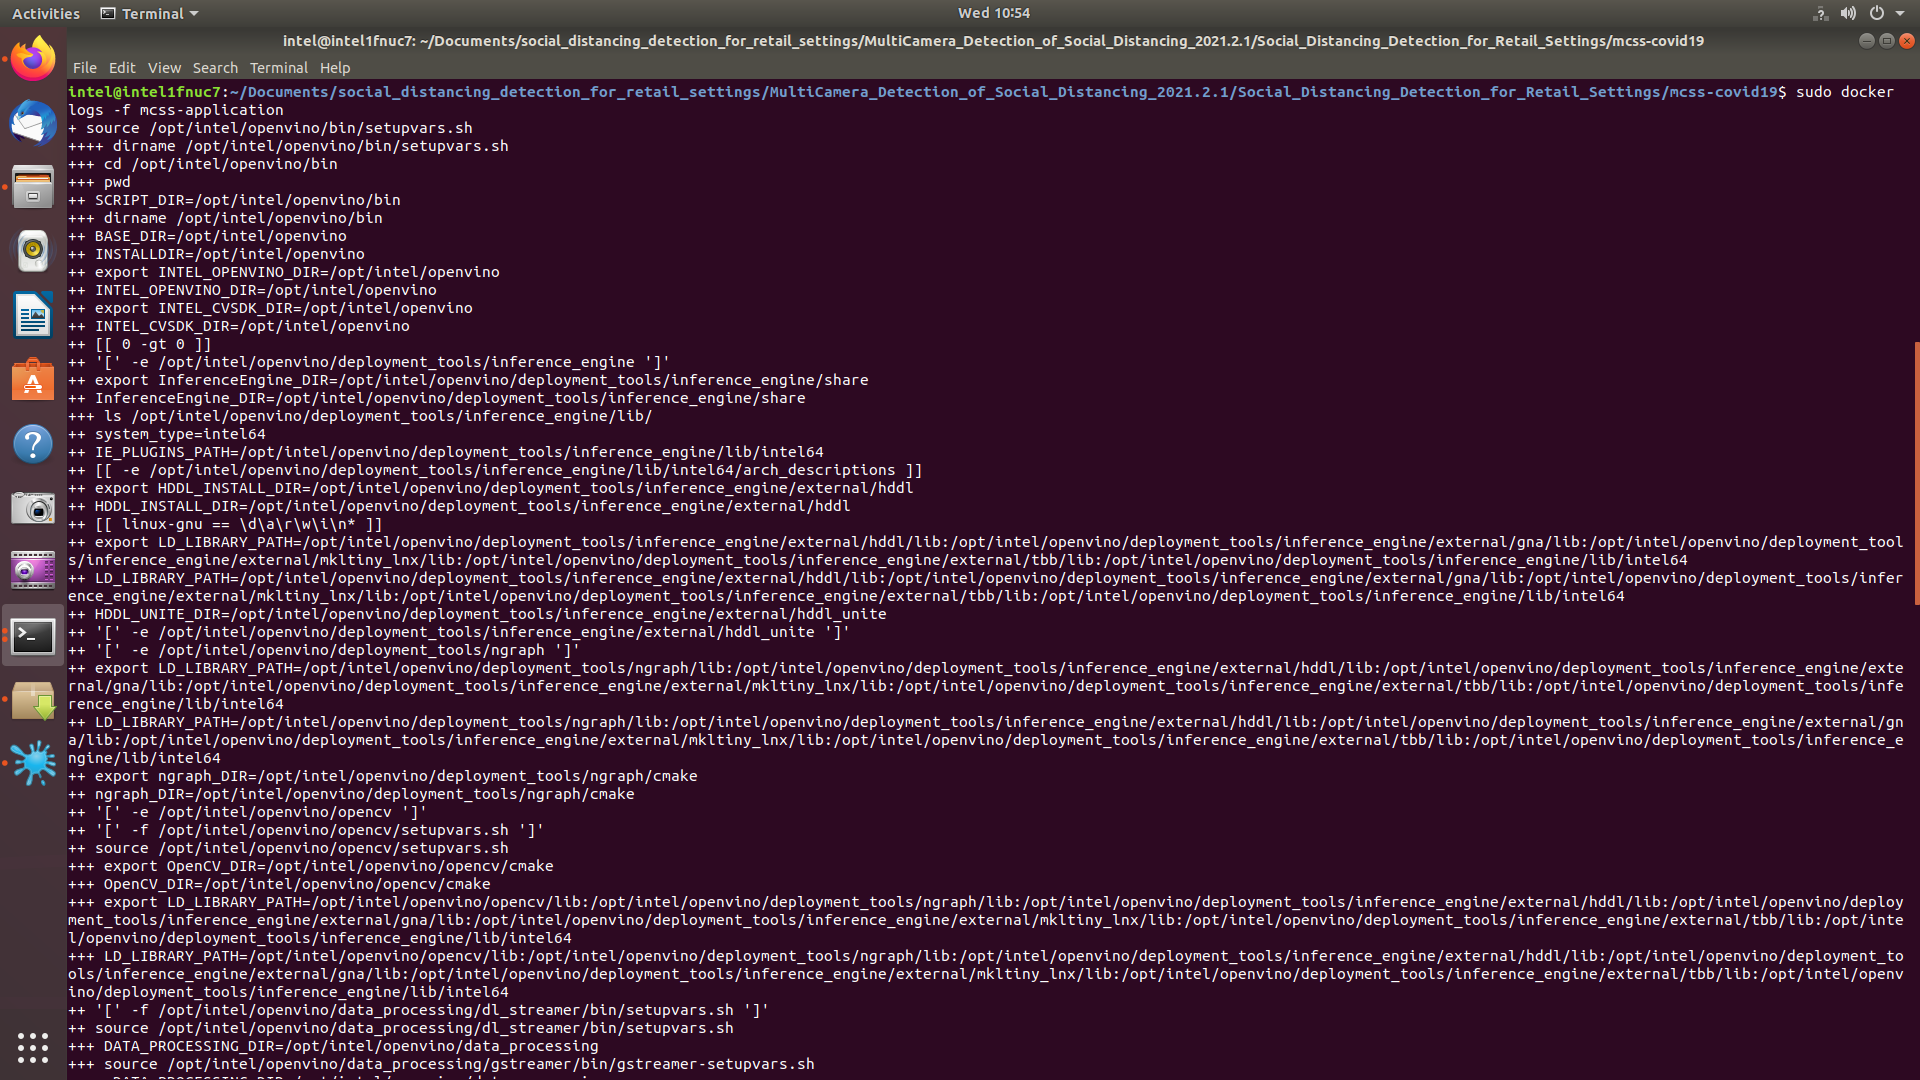 Screenshot of application logs